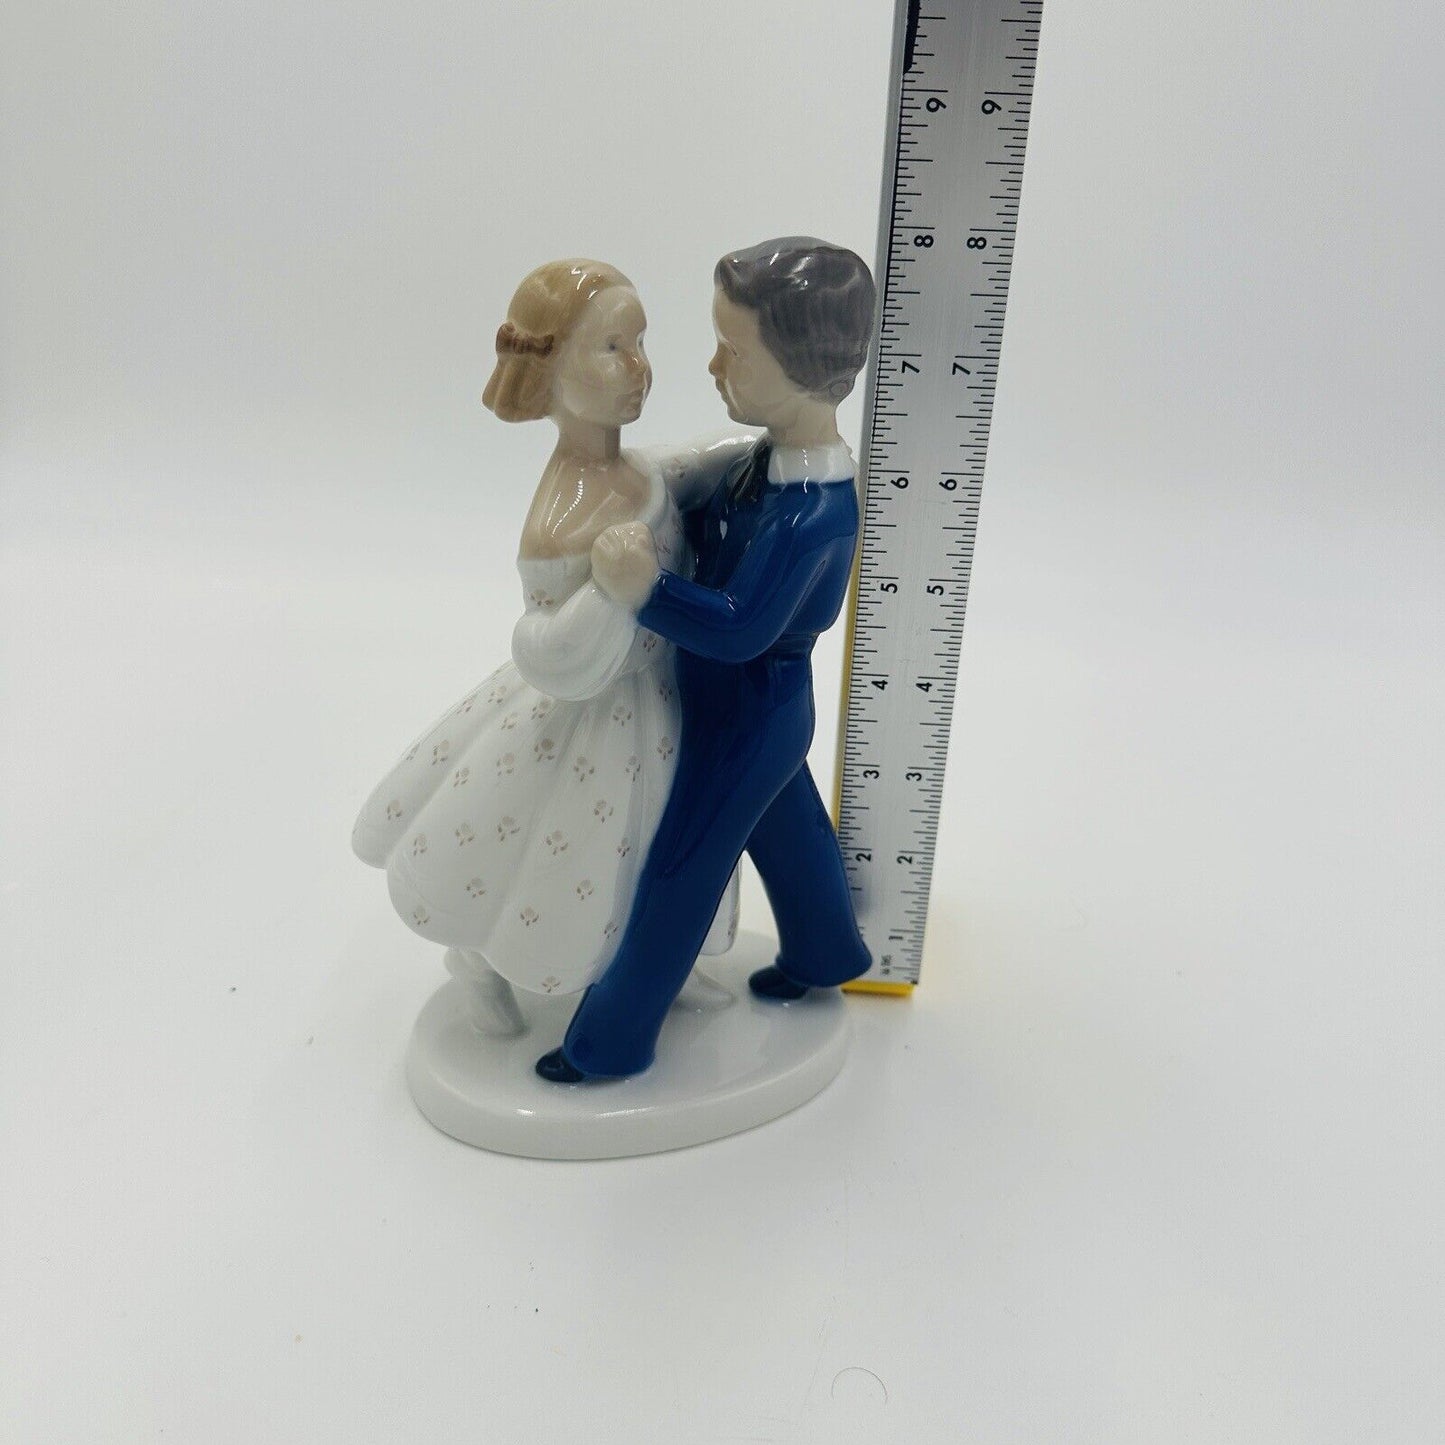 Bing & Grondahl Denmark 1980s Porcelain Dancing Couple Figurine #2385 Vintage 8”